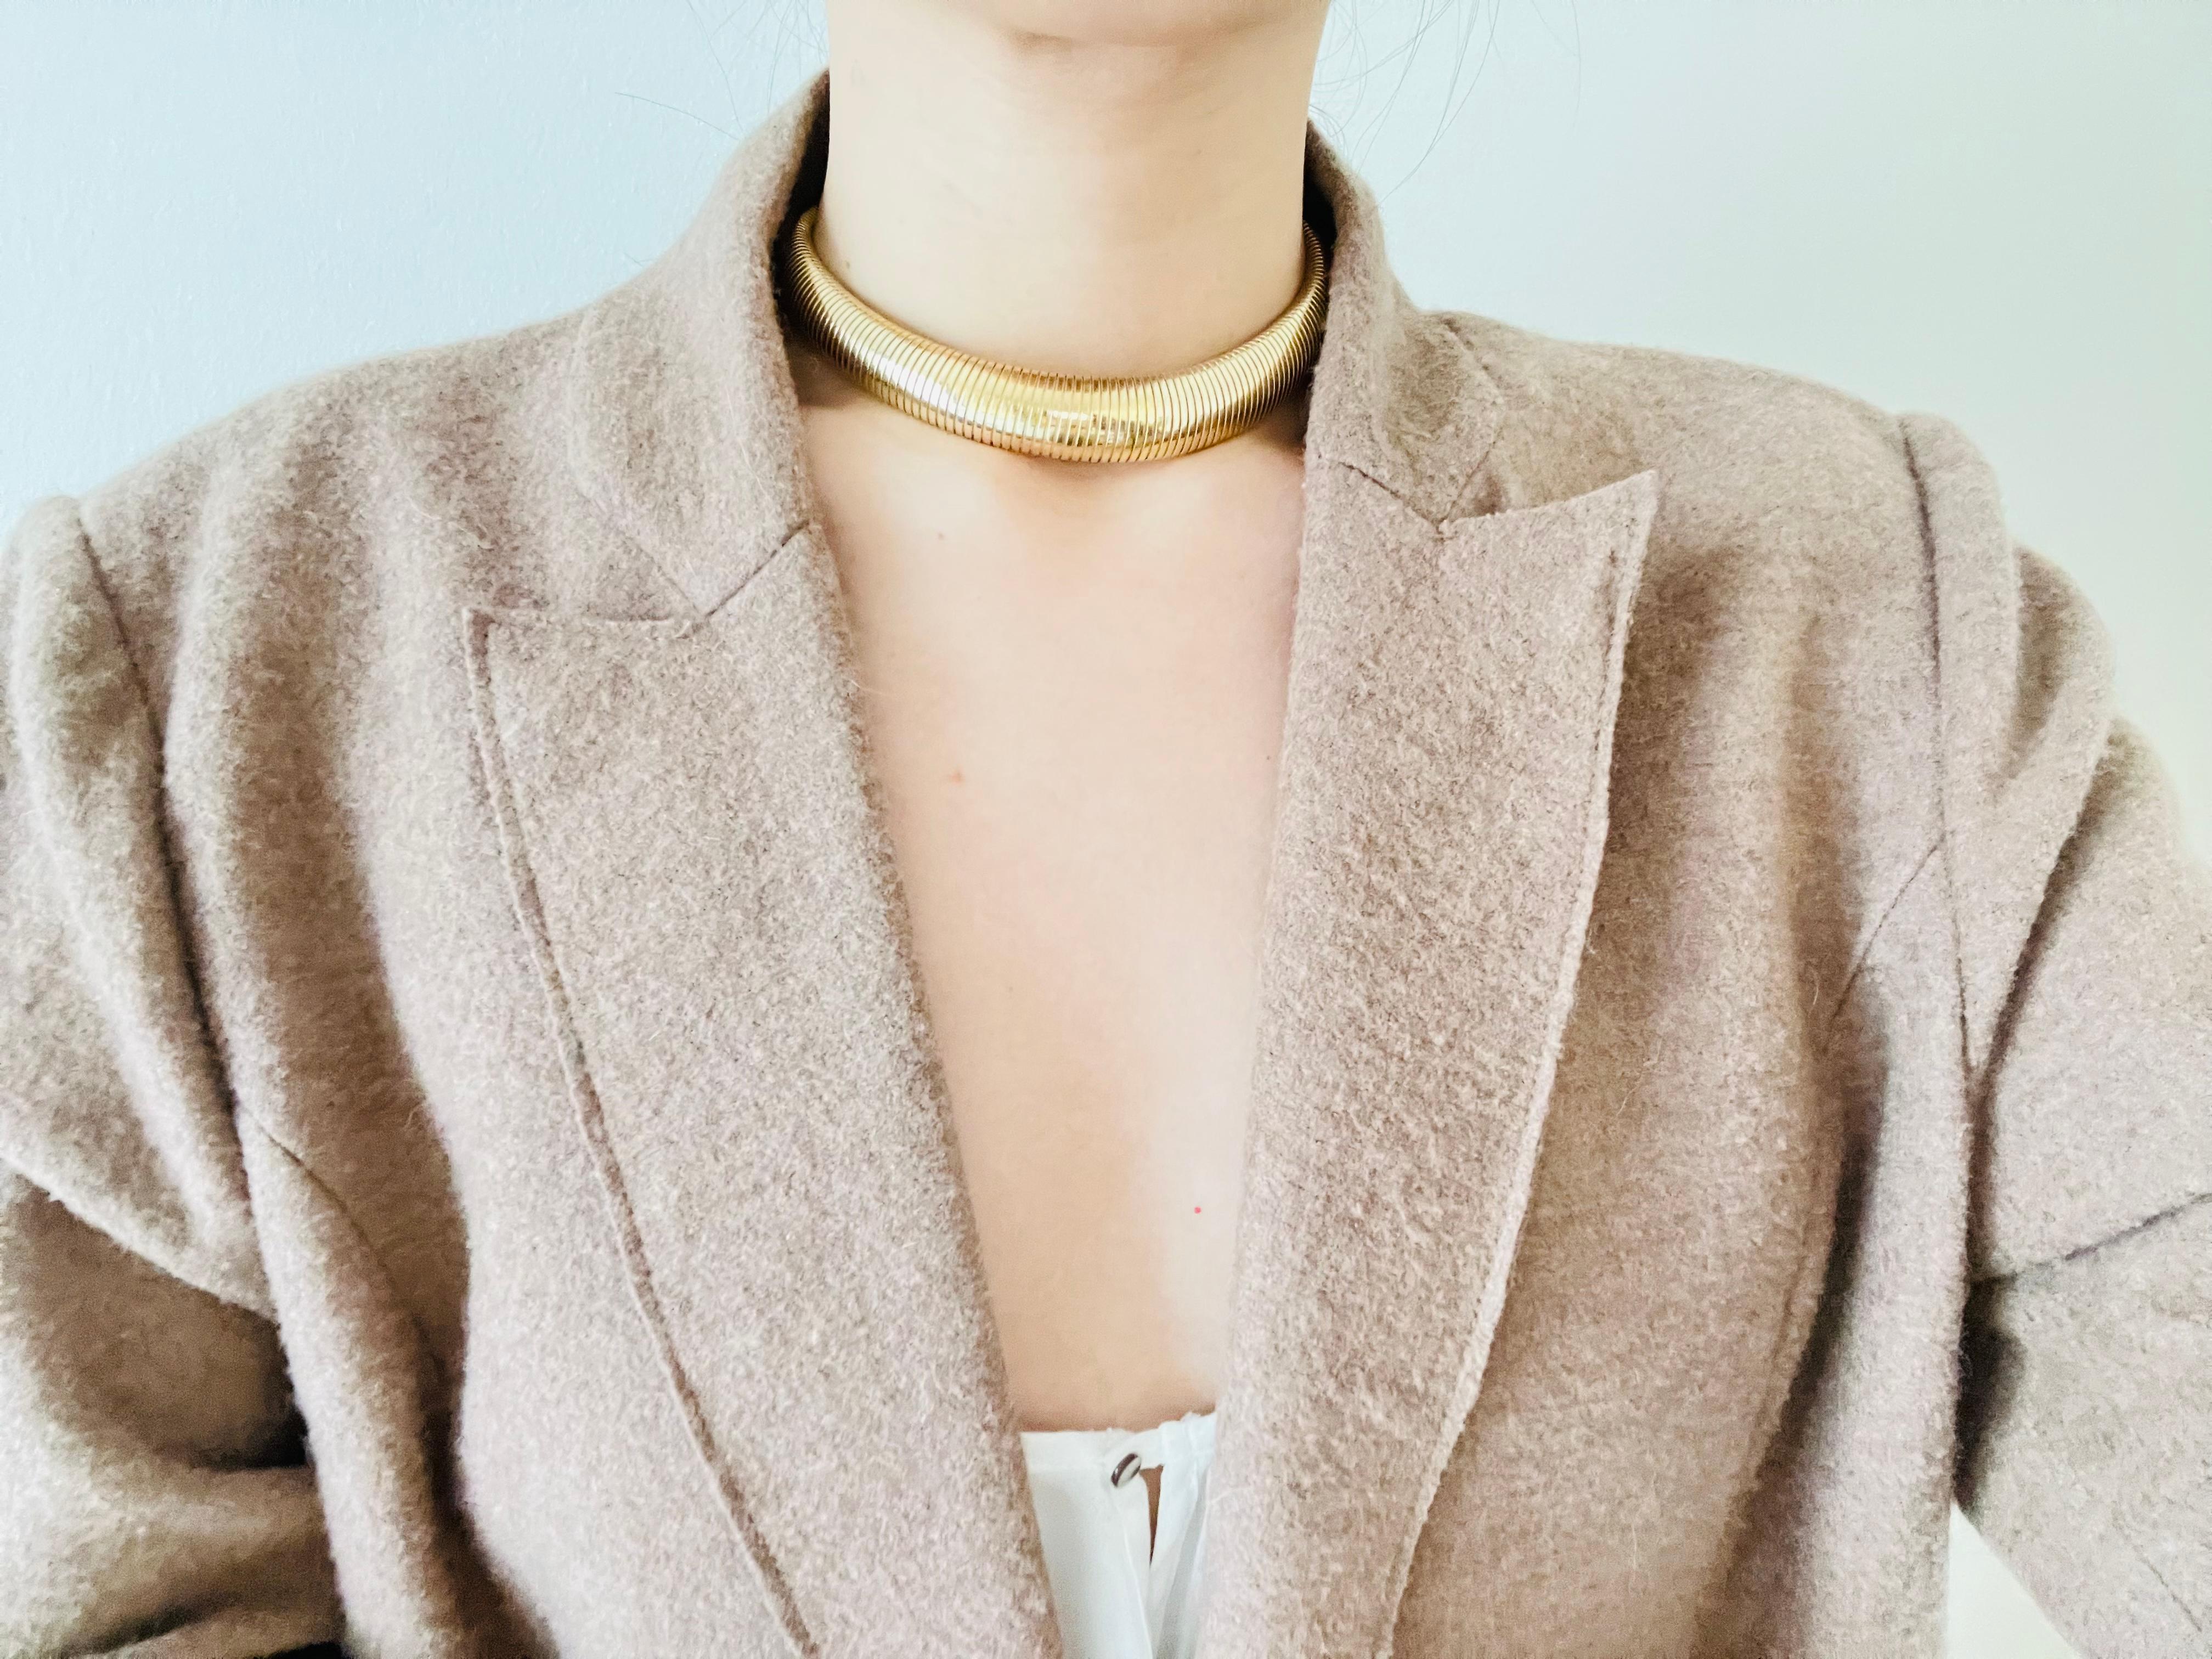 Christian Dior Vintage 1980s Unisex Ribbed Omega Snake Choker Collar Necklace For Sale 1